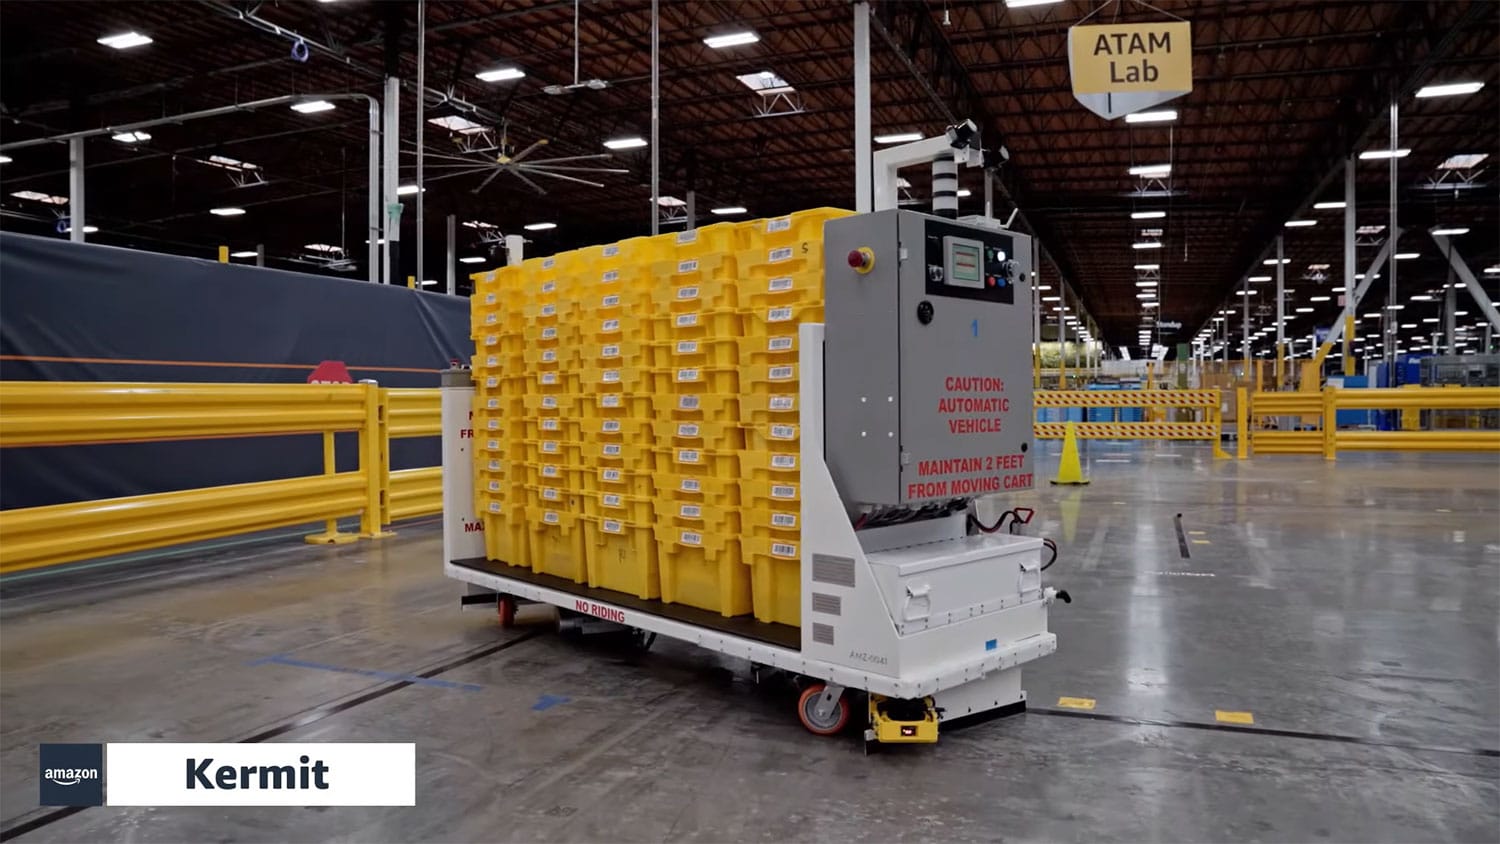 Amazon's new warehouse robots help make employees’ jobs safer